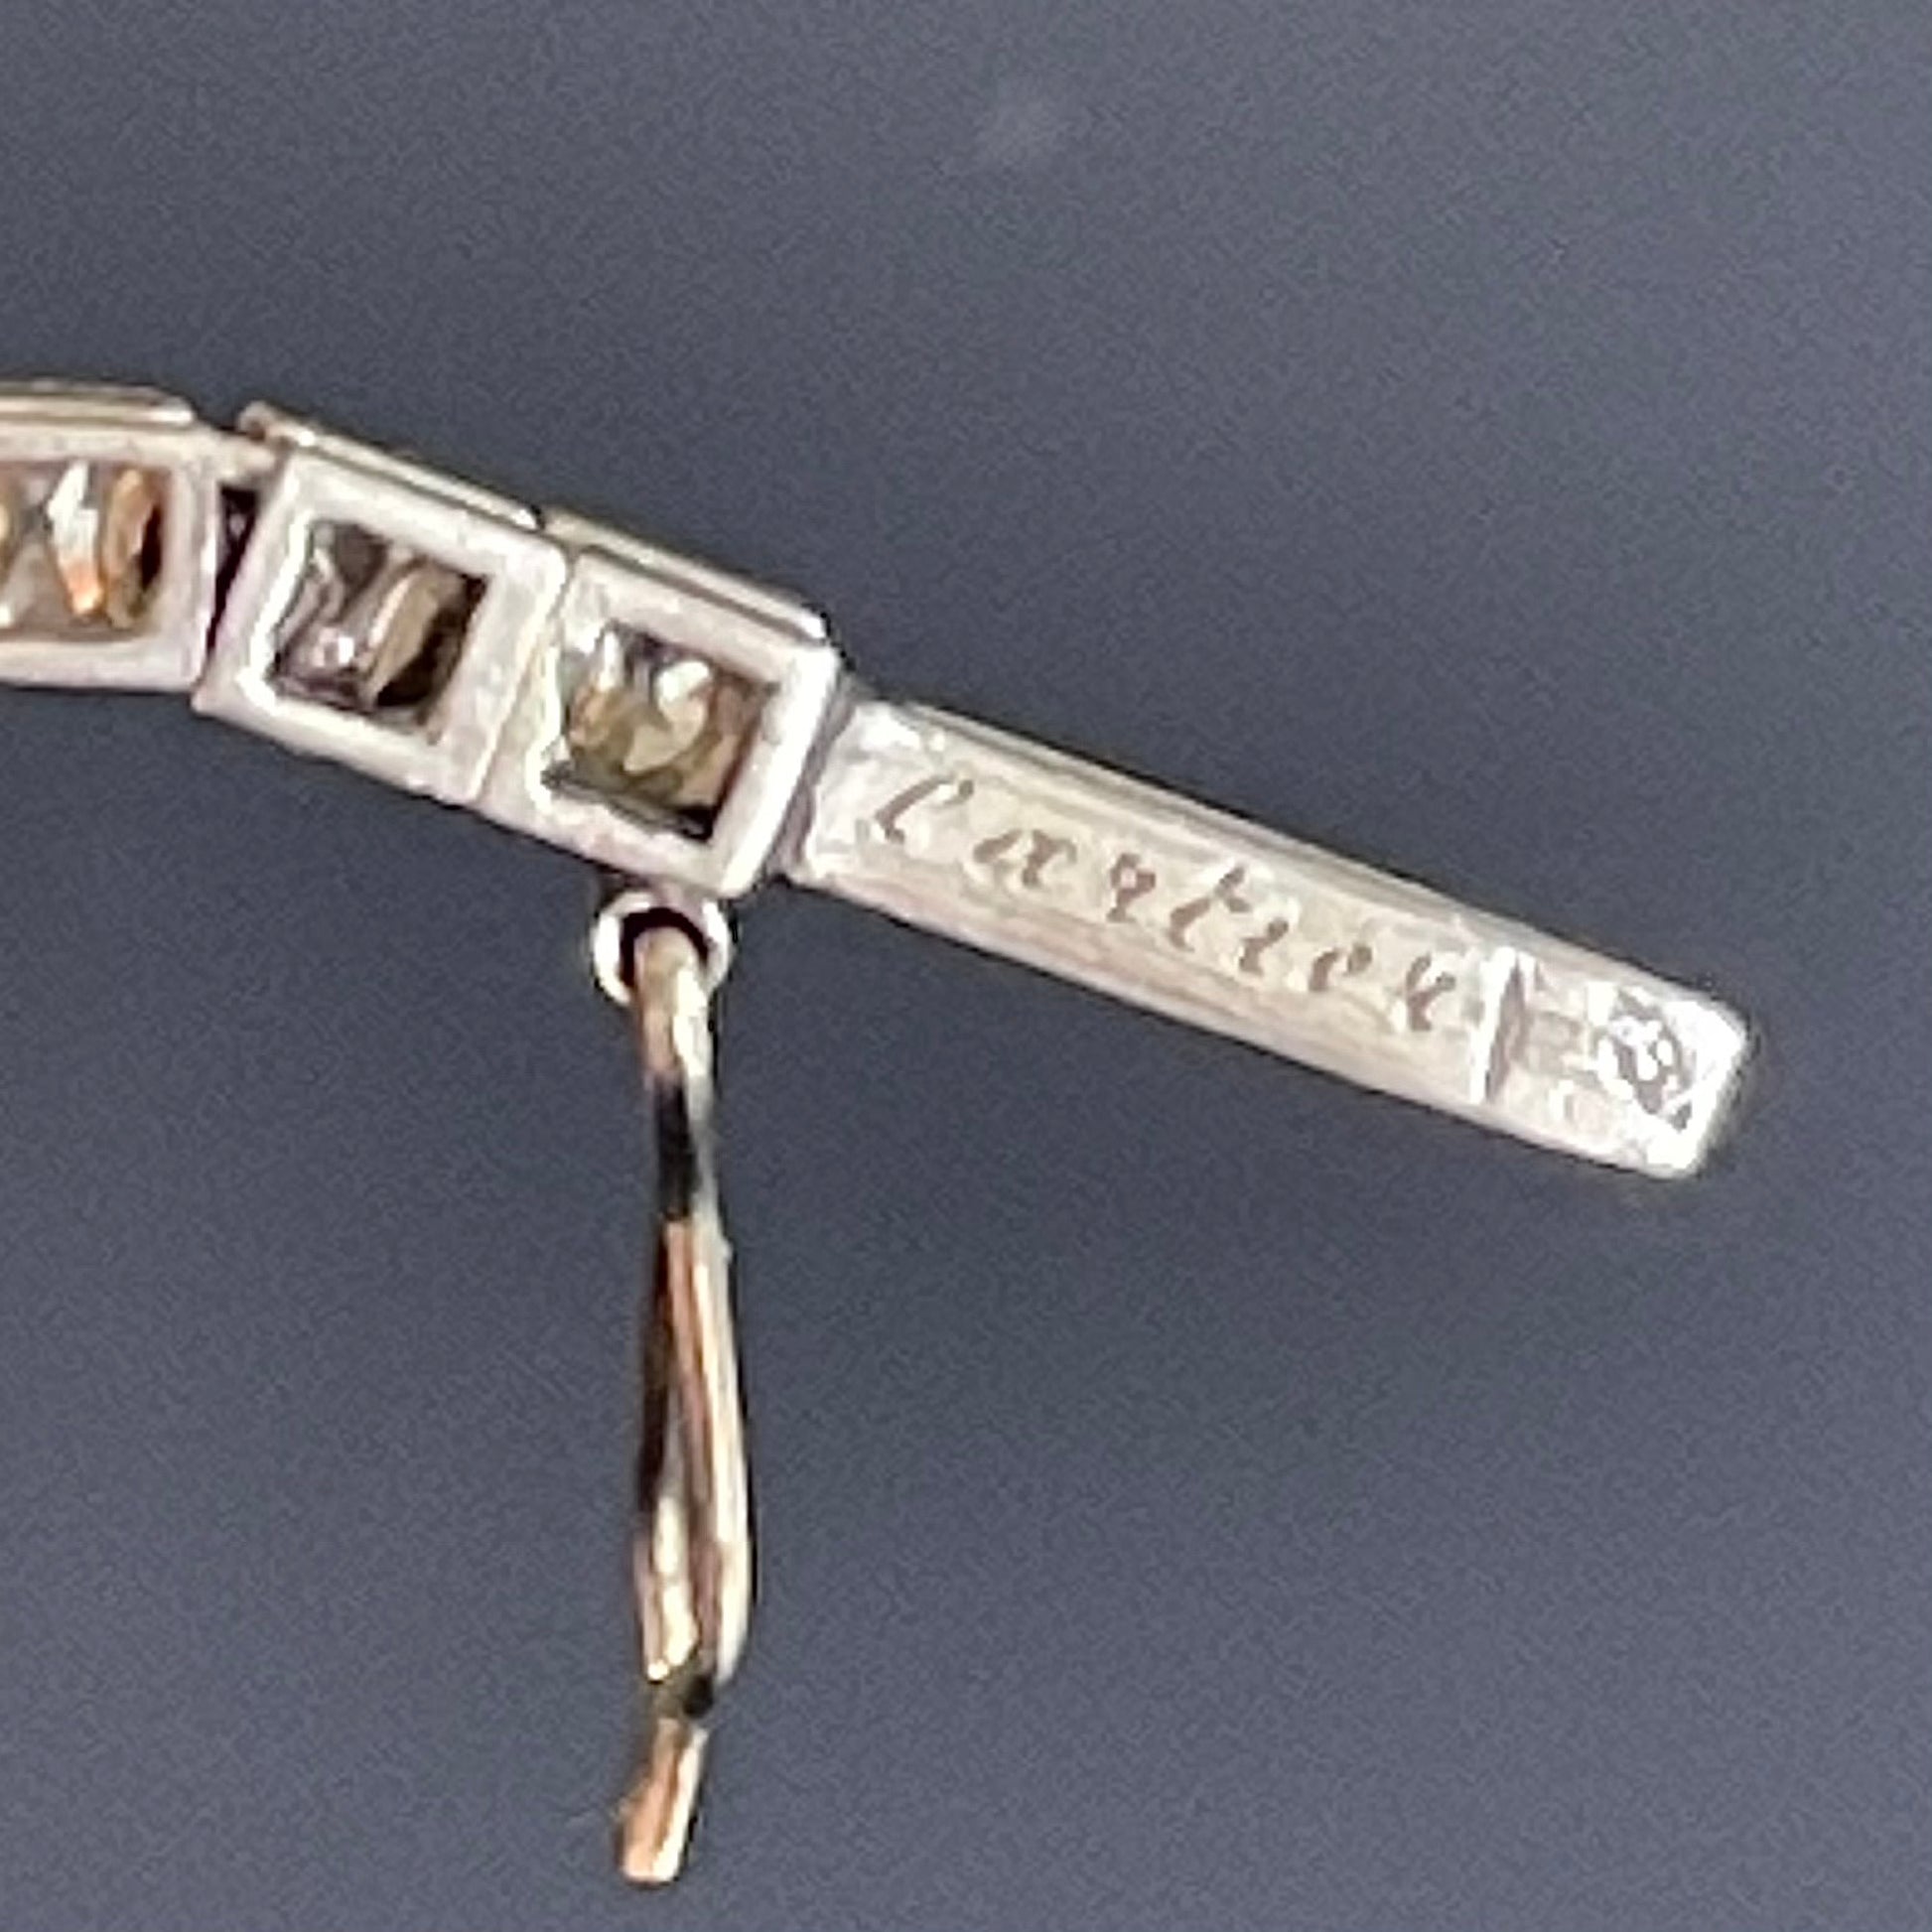 Cartier Art Nouveau Platinum Diamond & Natural Pearl Necklace close-up of signature